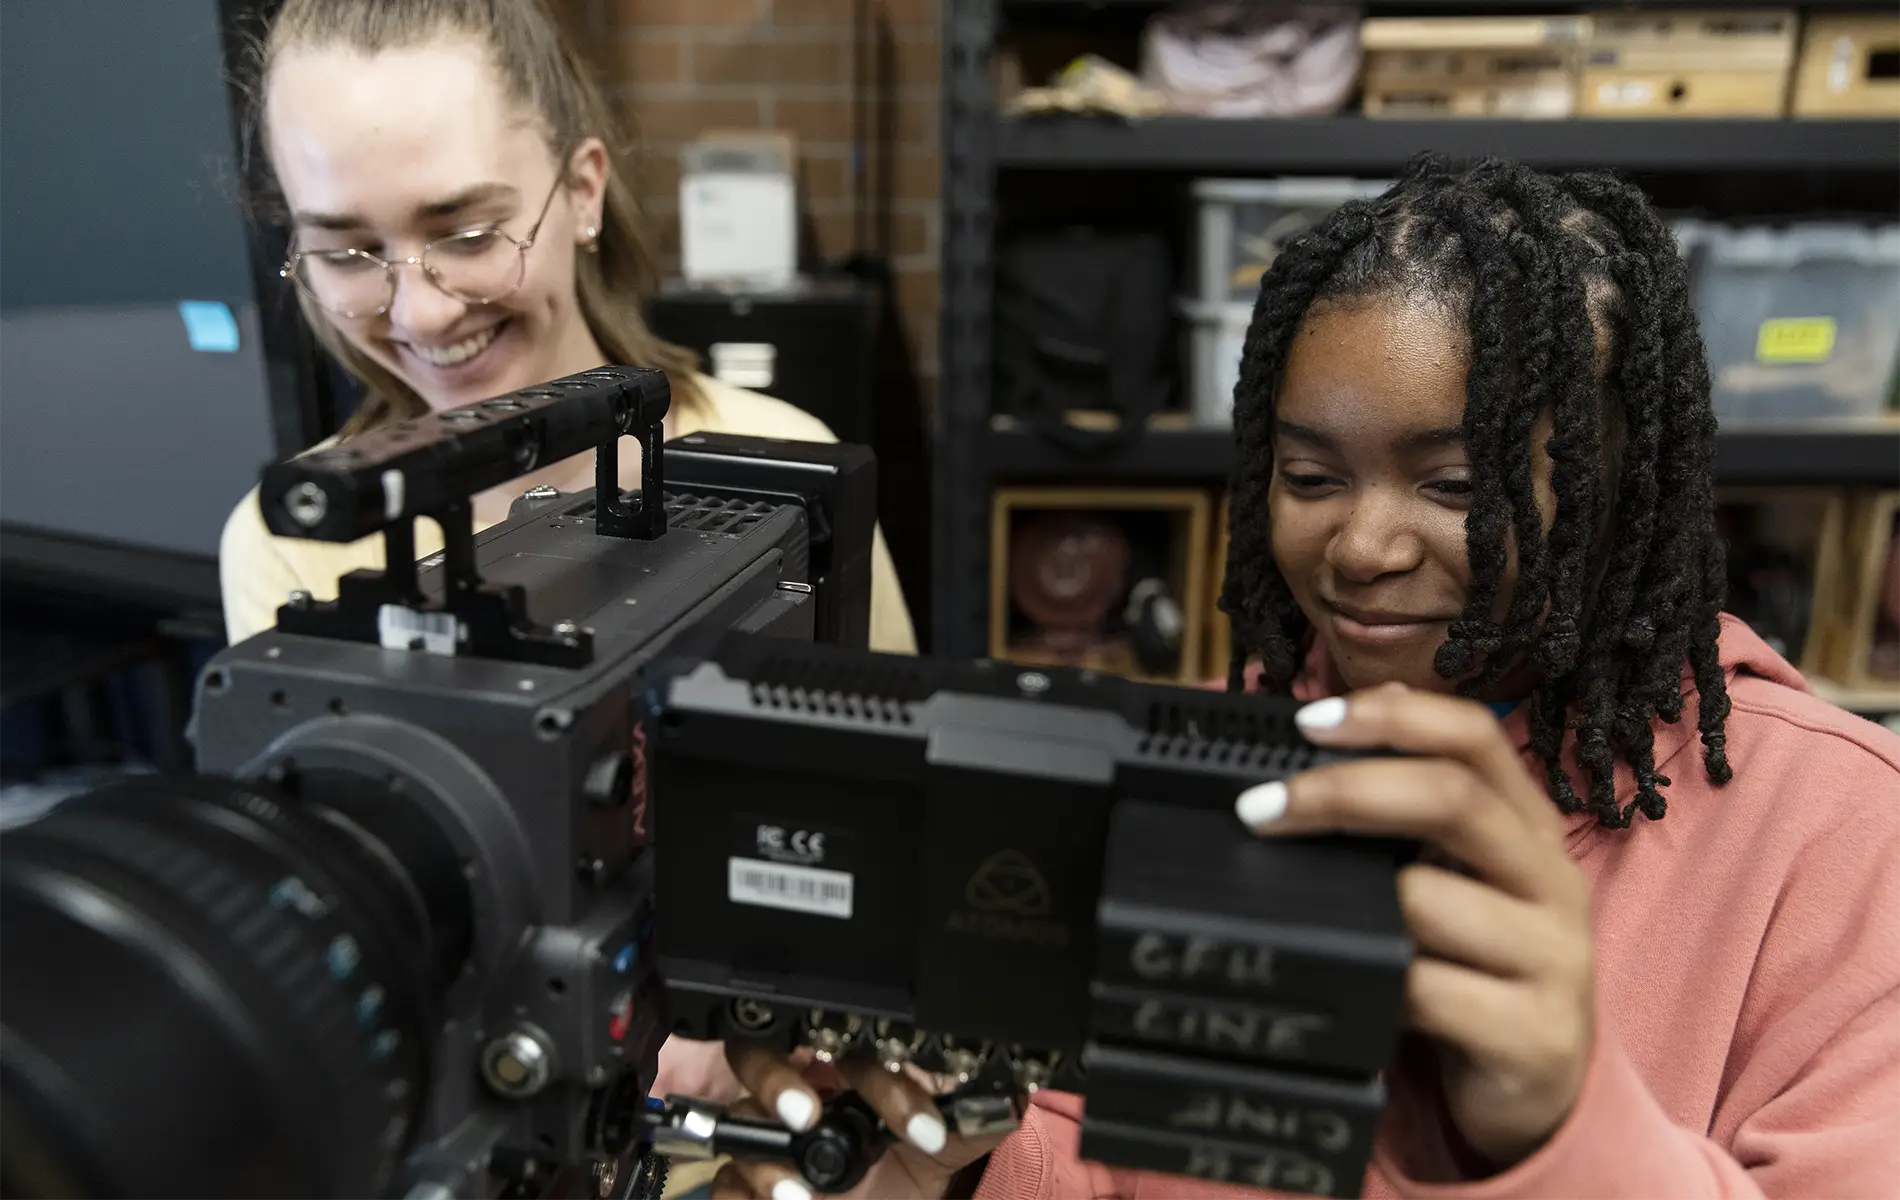 Film & Video Production Program, Christian College in Oregon